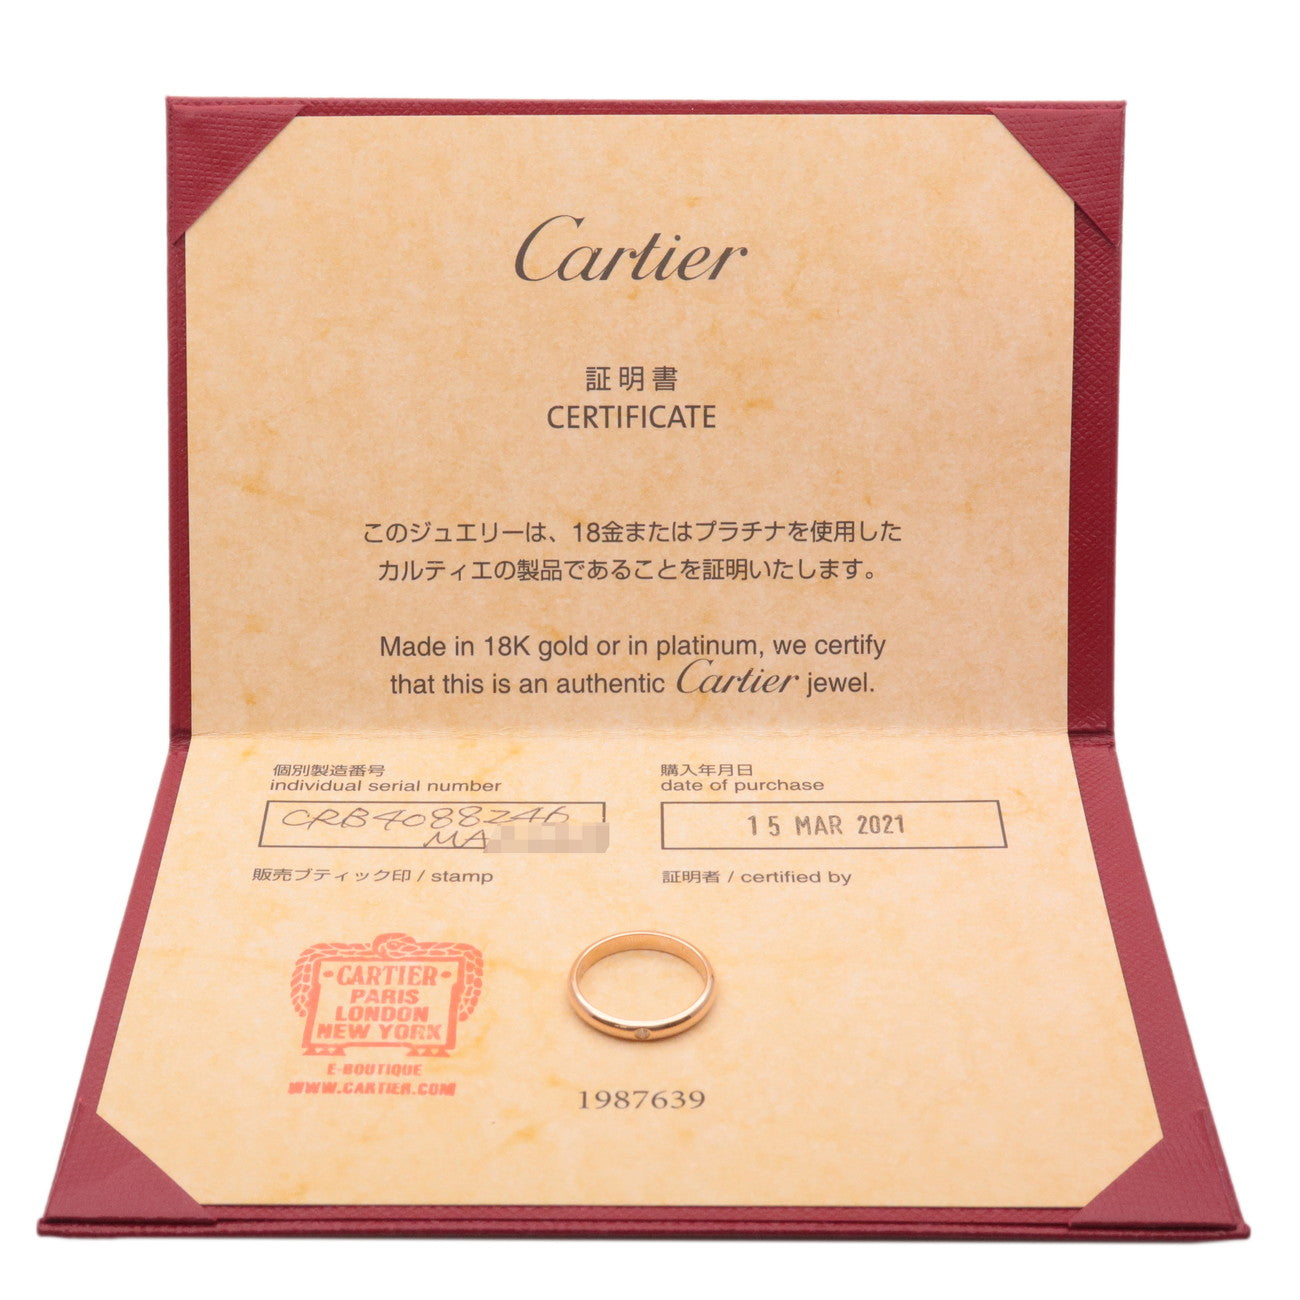 Cartier 1895 Wedding Ring 1P Diamond K18 Rose Gold #48 US3.5-4